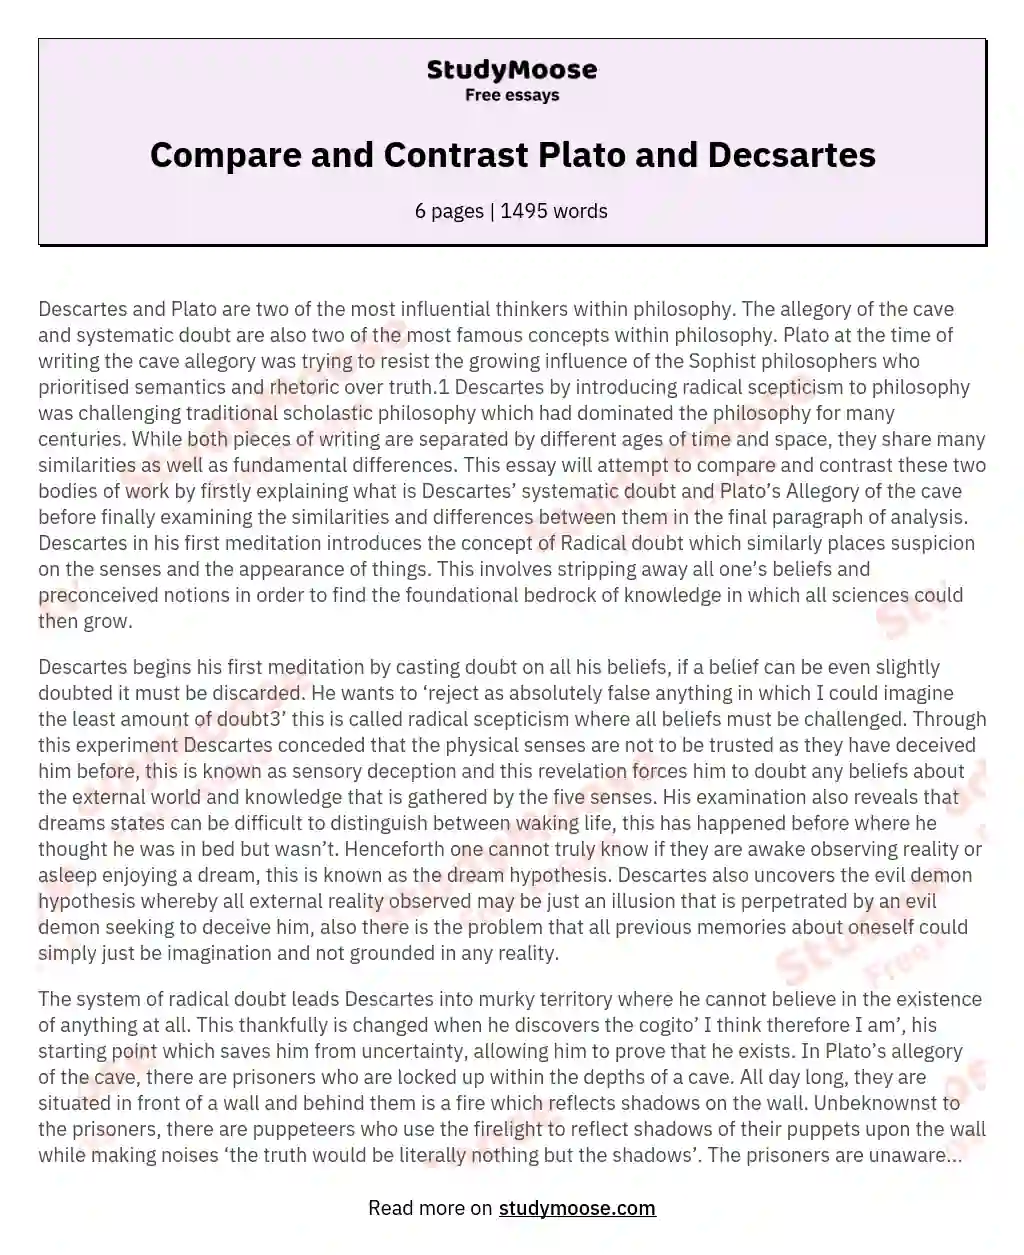 Compare and Contrast Plato and Decsartes essay